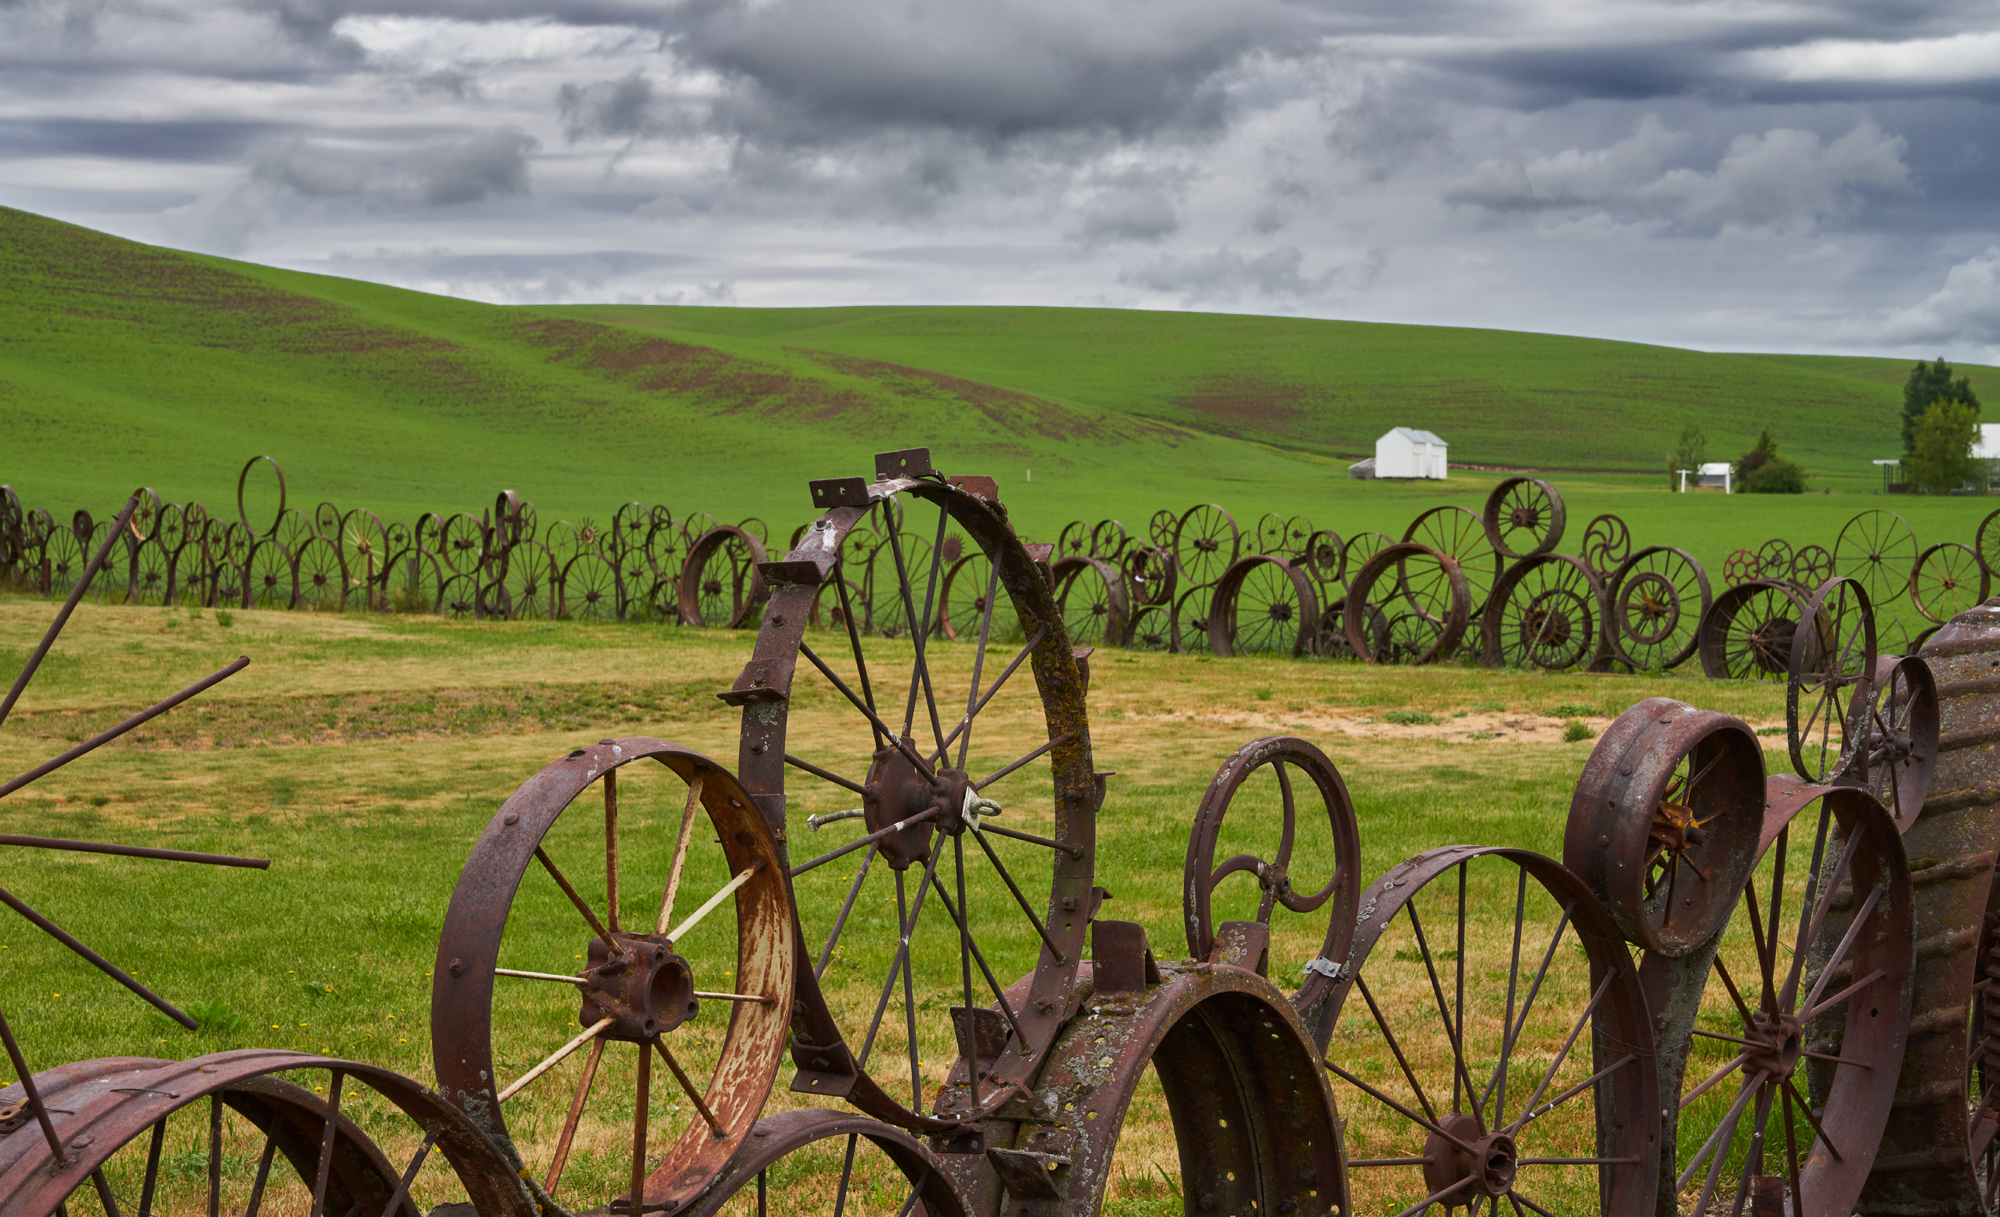 The iconic wagon wheel fence